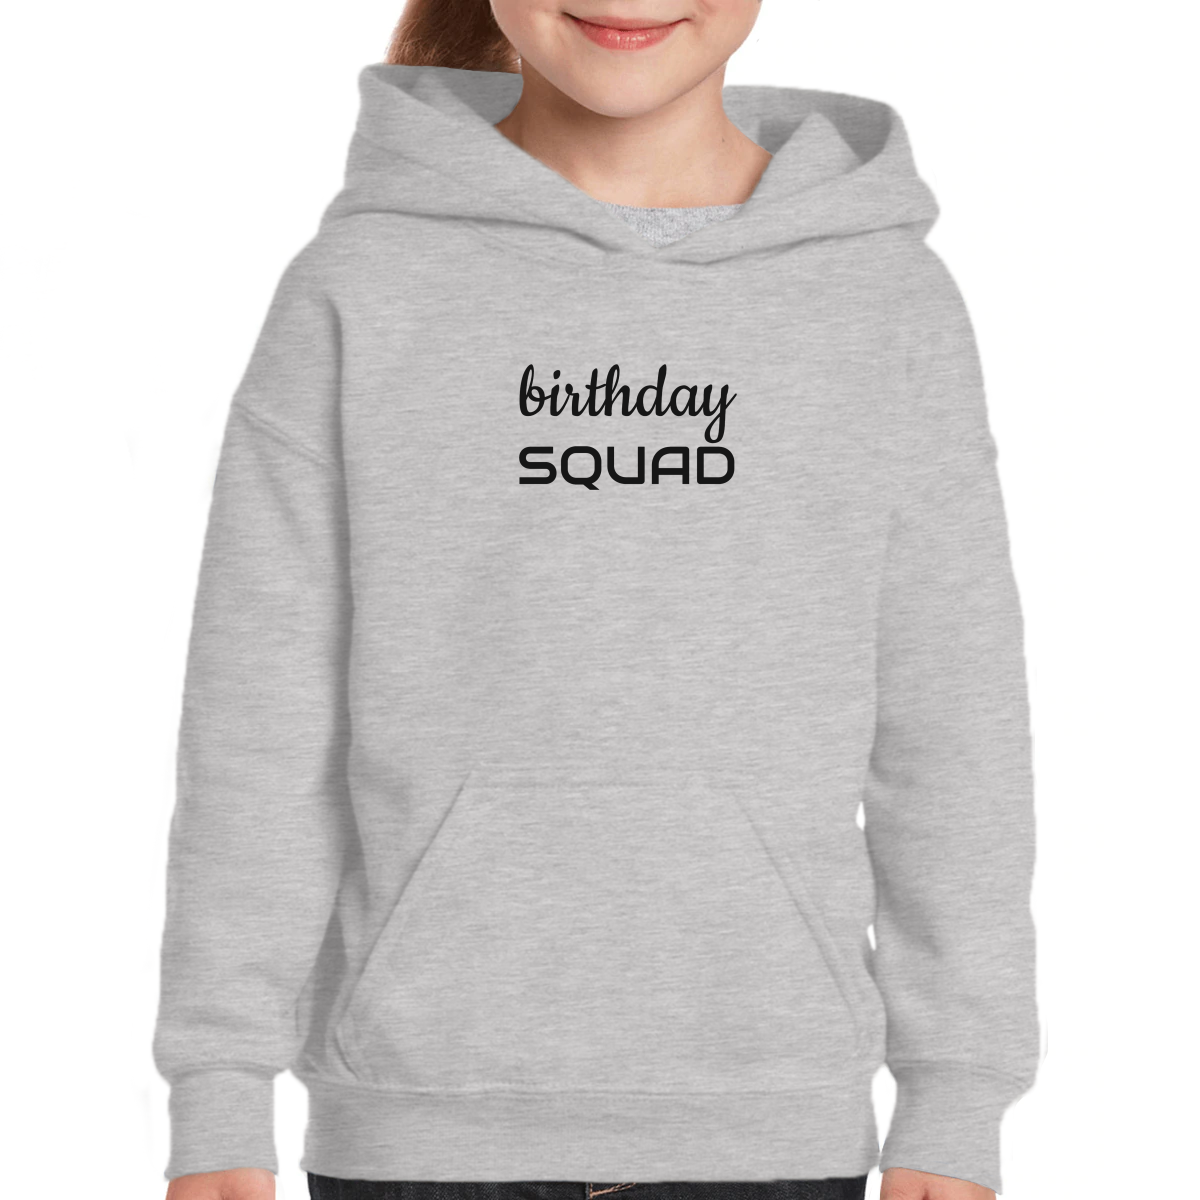 Birthday SQUAD Kids Hoodie | Gray